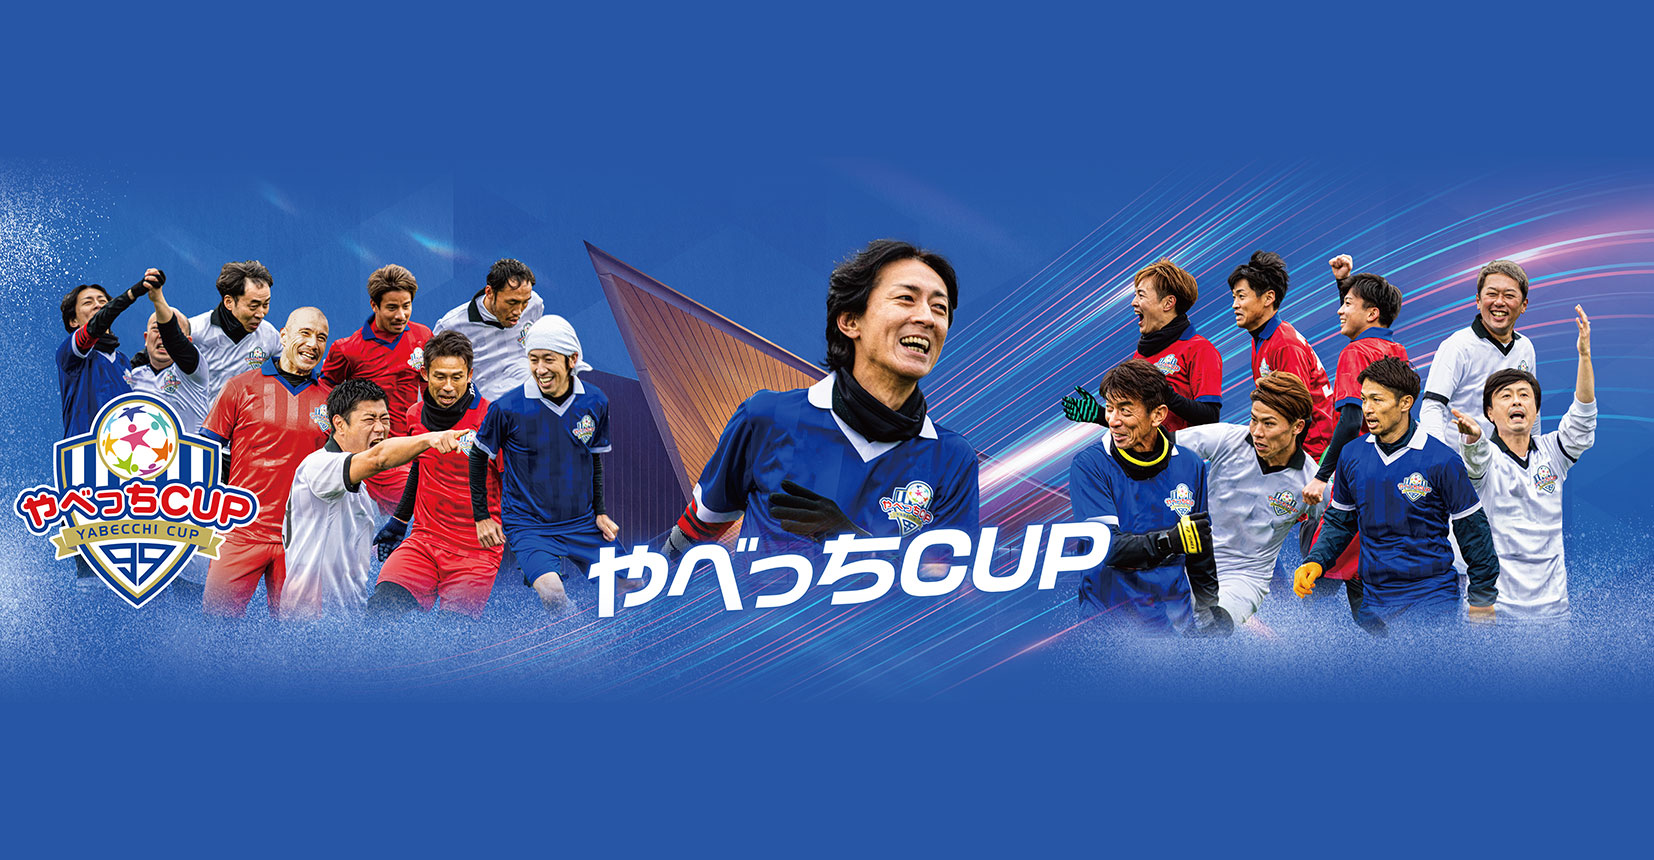 『U12サッカー大会 やべっちCUP 2023』の開催が決定！